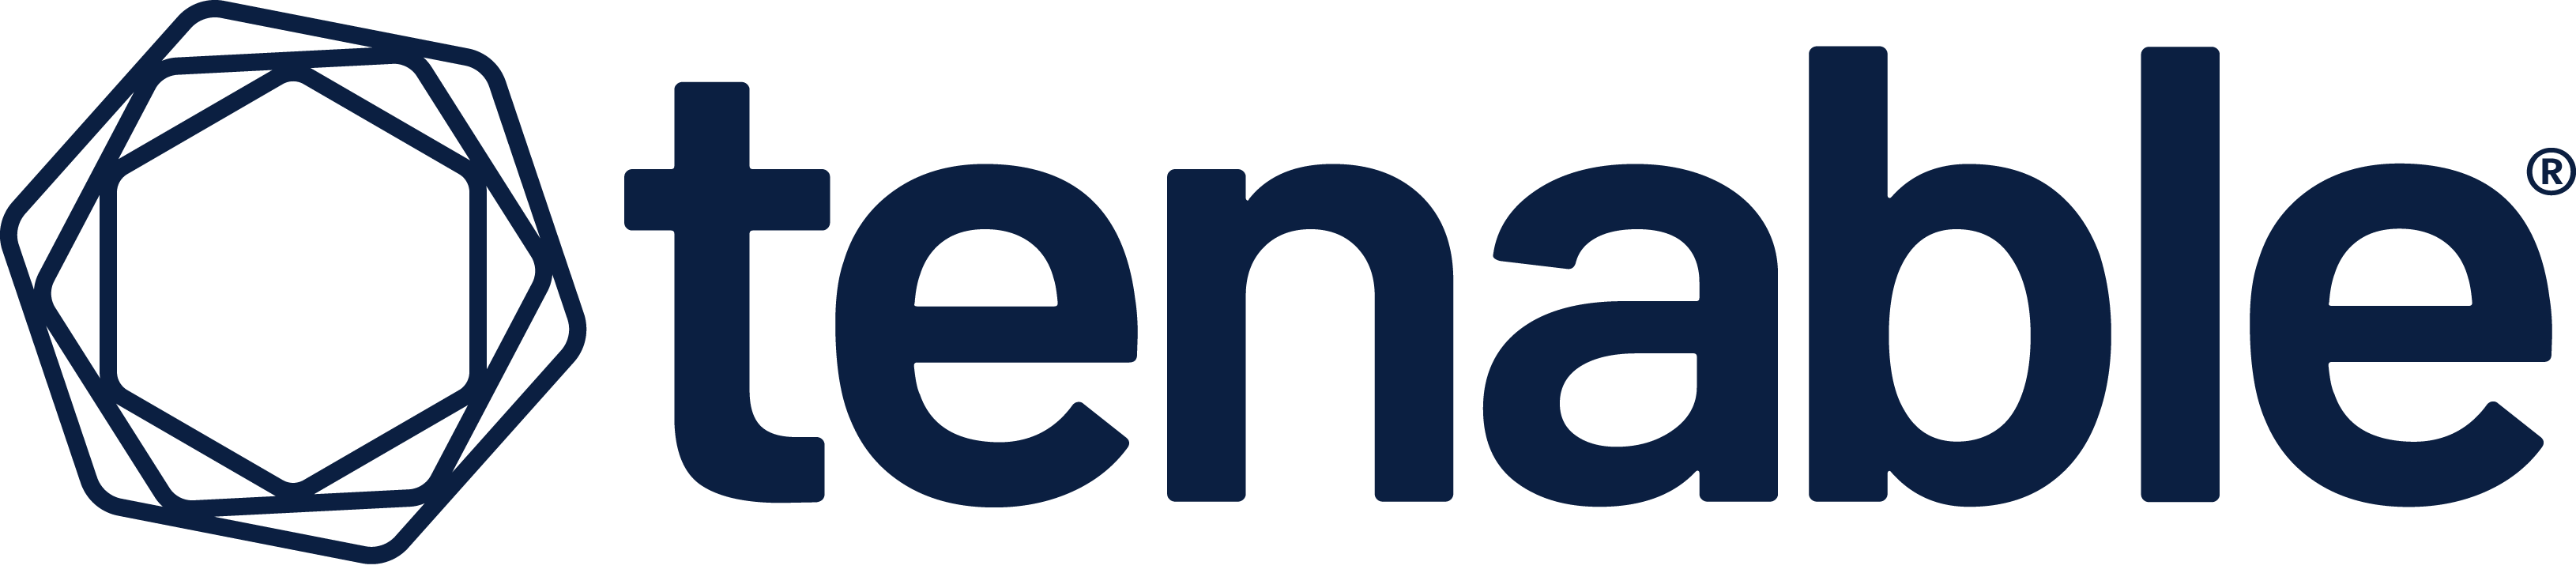 Fedora 36: kernel 2023-00393126a0